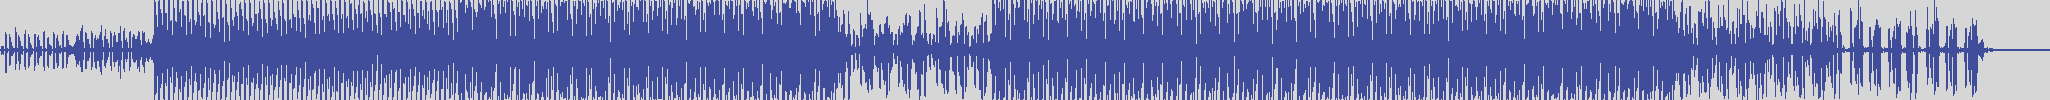 nf_boyz_records [NFY072] Tubescore - Cardio Sound [Jongh Long's House Mix] audio wave form